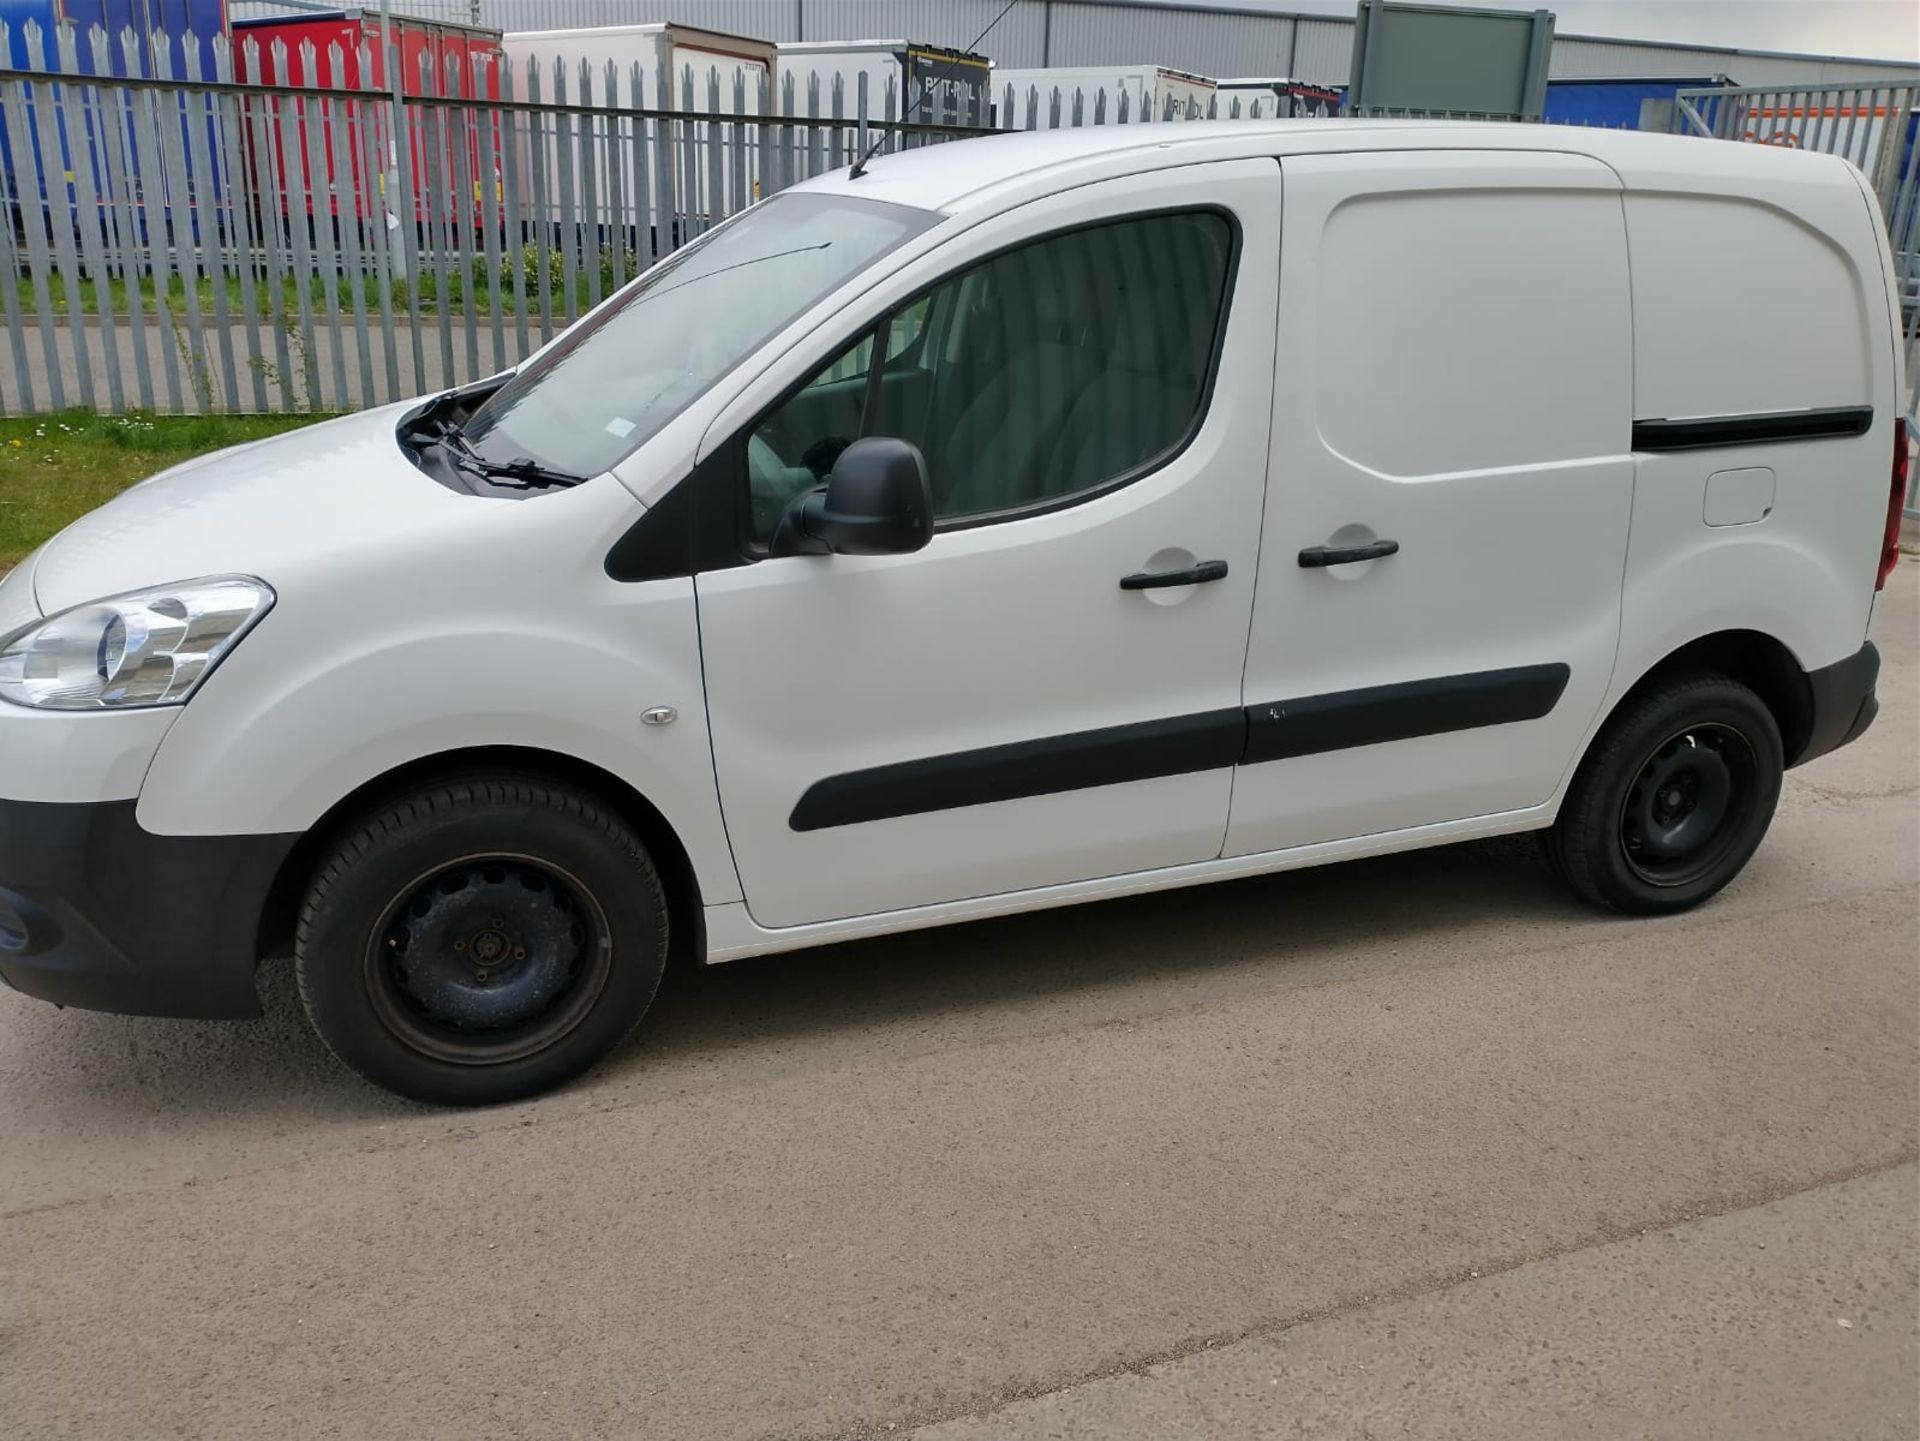 2015 Peugeot Partner Panel Van - CL505 - Location: Corby - Image 10 of 15